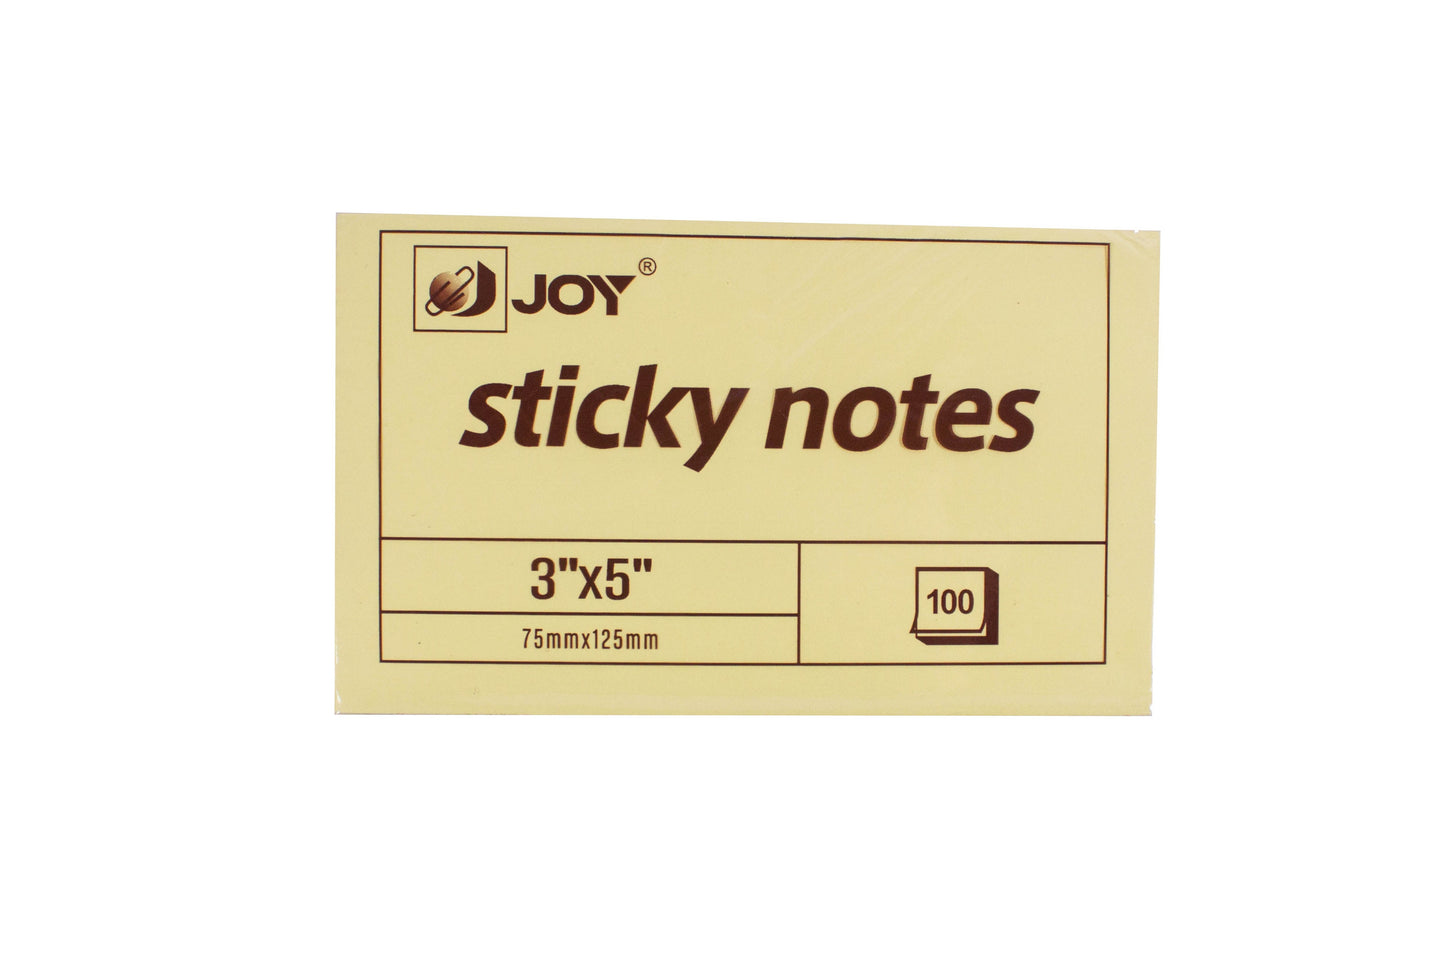 Joy Sticky Note 3in x 5in 100 sheets